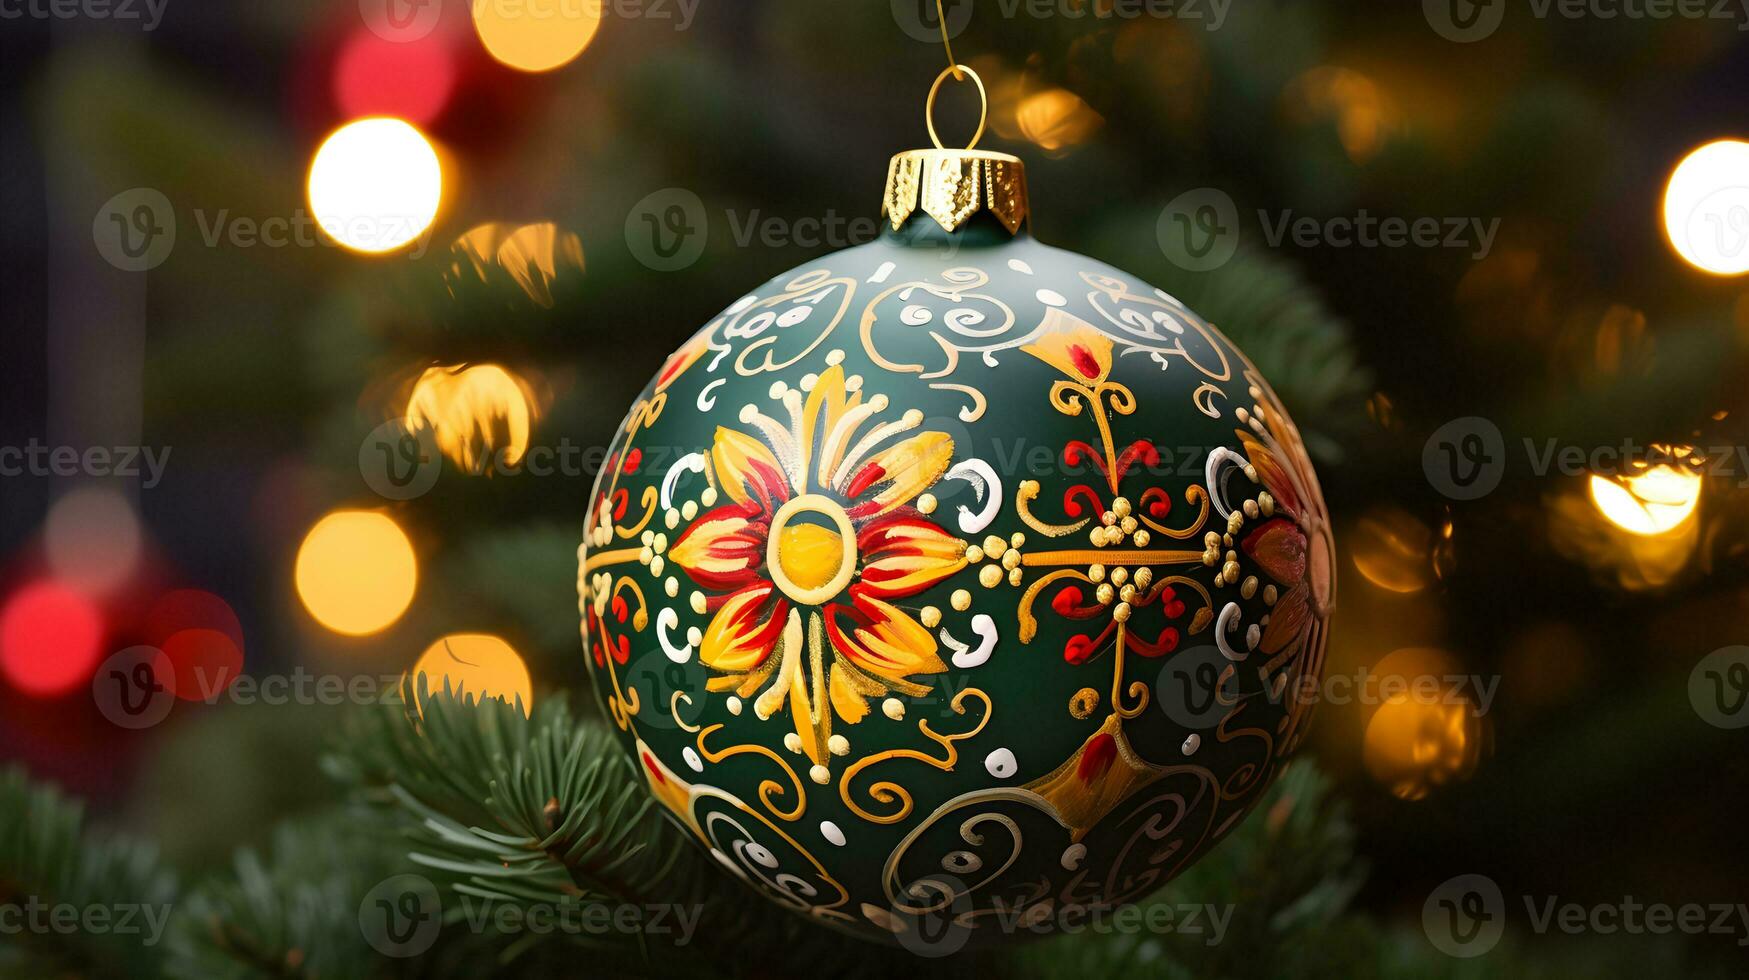 Kerstmis boom bal met volk ornament. ai gegenereerd afbeelding. foto